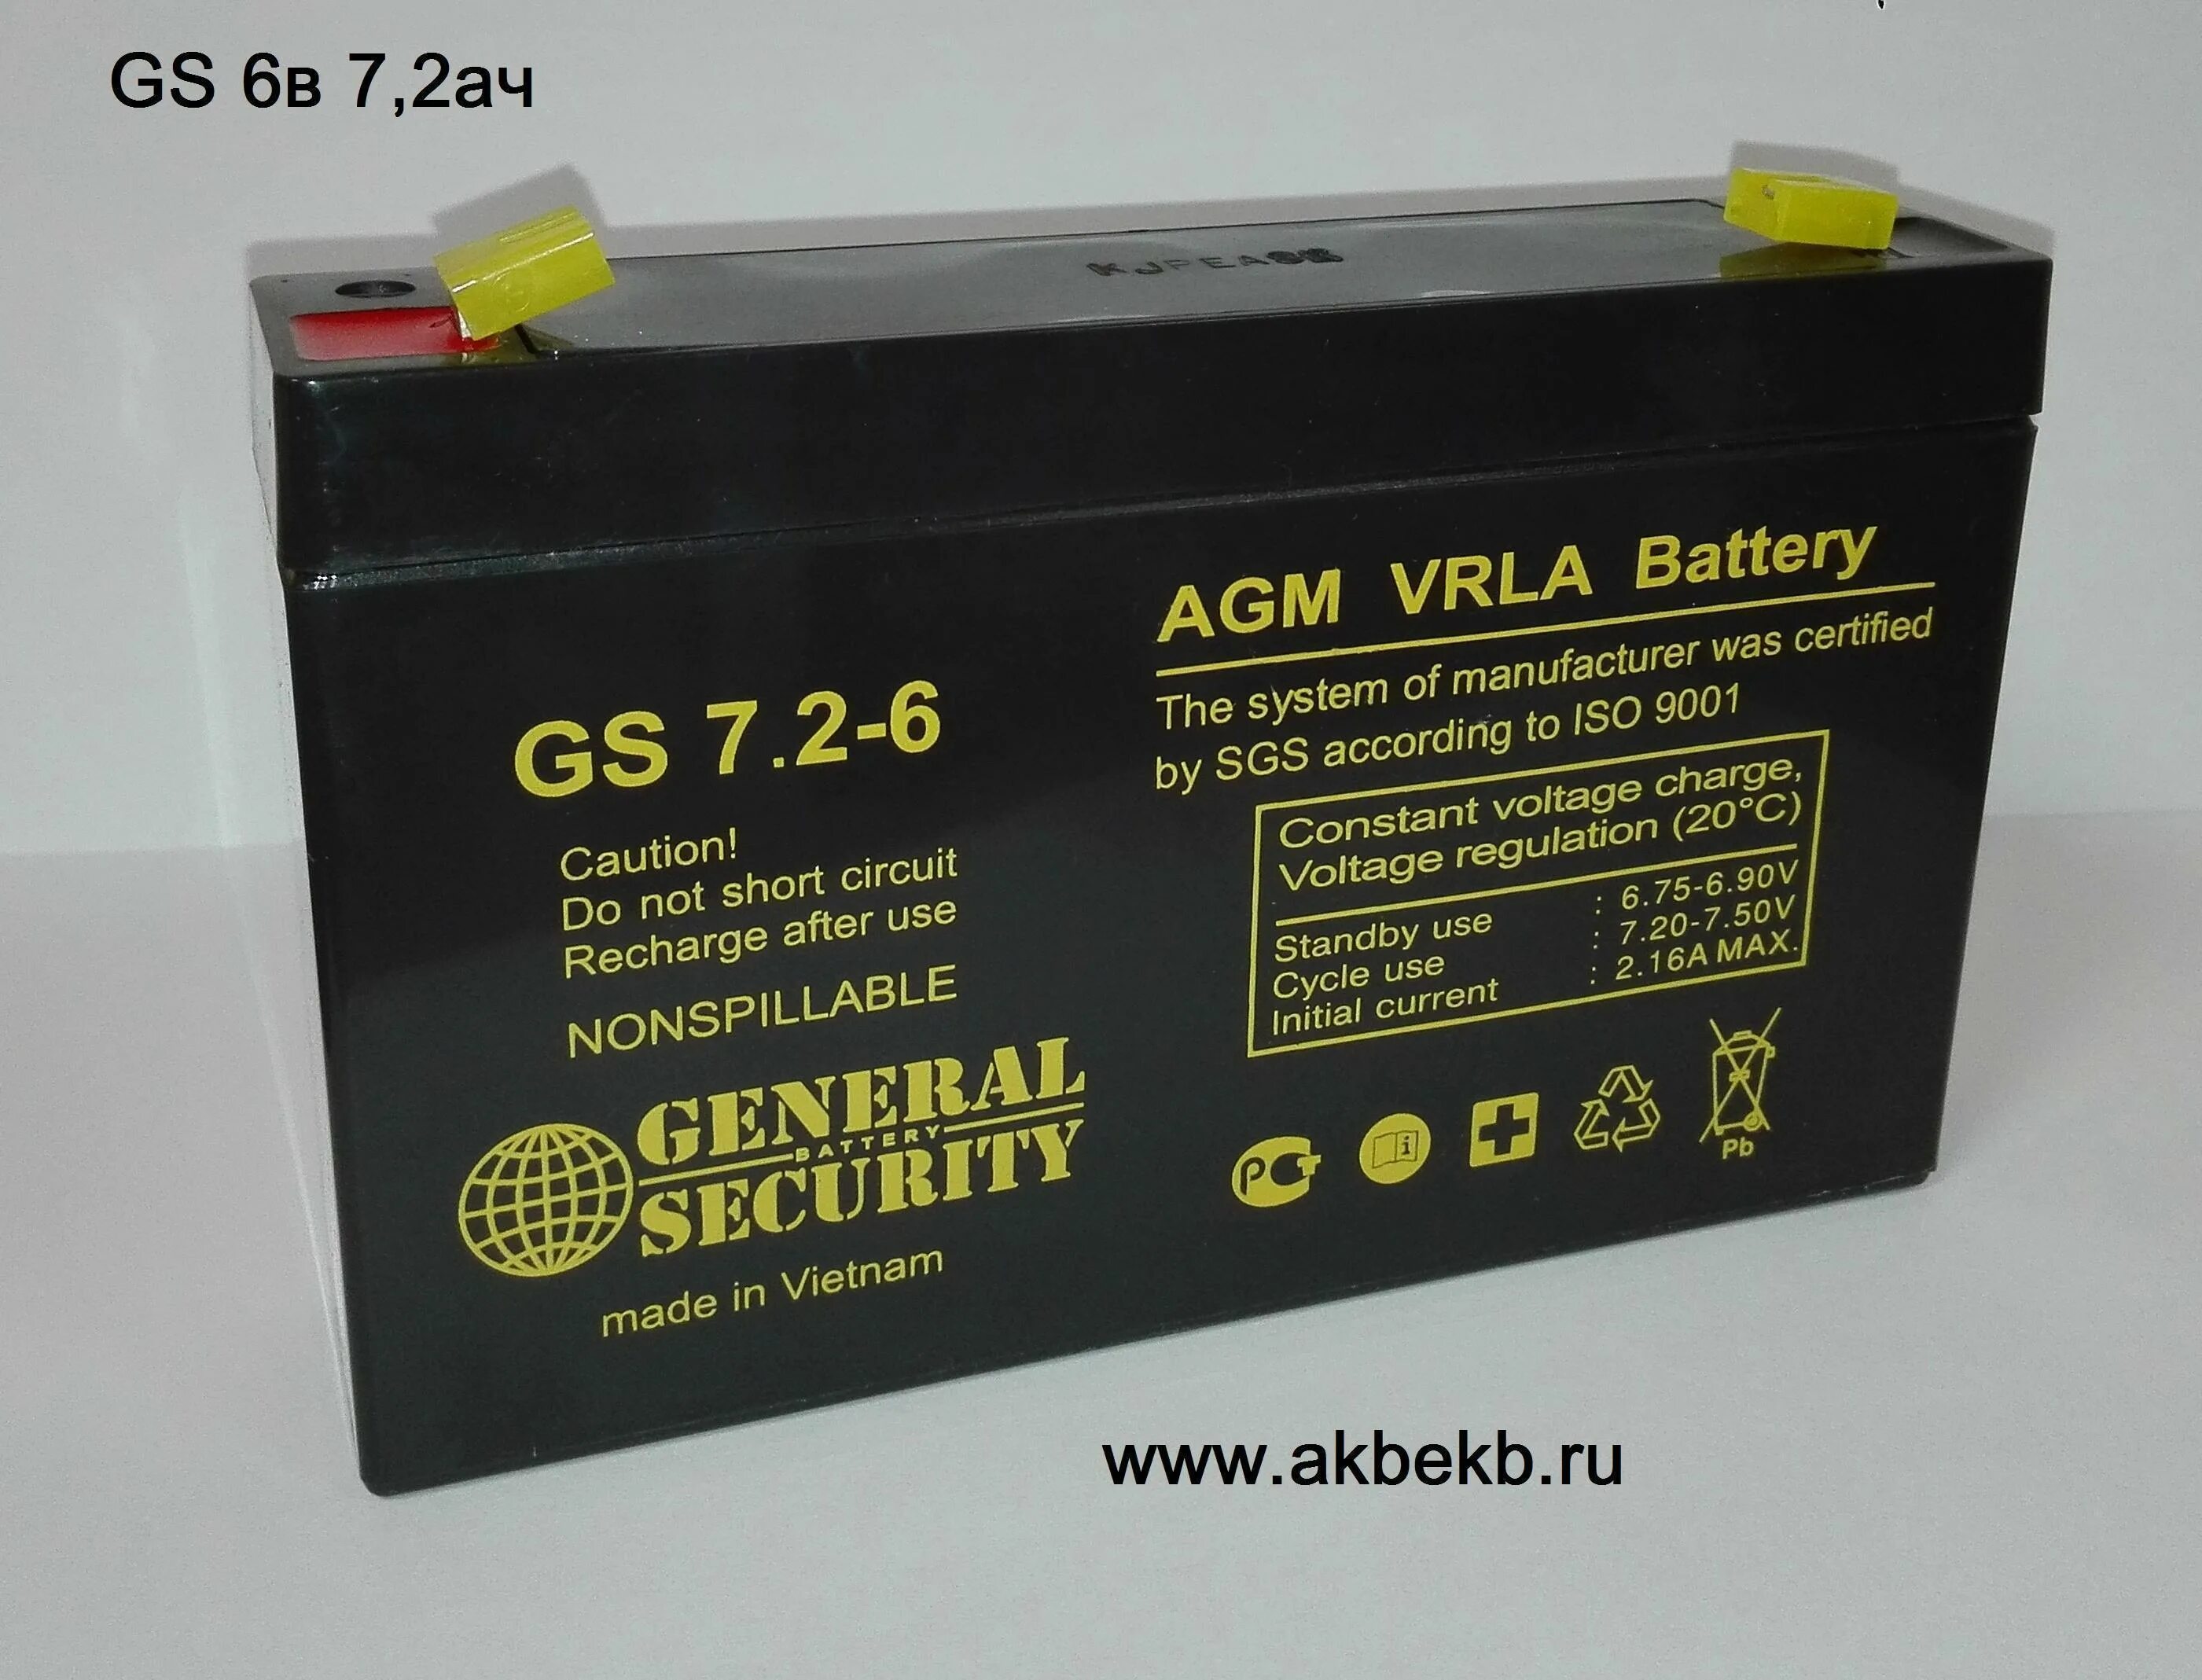 Vrla battery аккумуляторы. АКБ GSL 7.2-12. GSL7.2-12 General Security аккумулятор. AGM VRLA Battery GS 7.2-7. AGM GS 7.2-12 VRLA Battery.